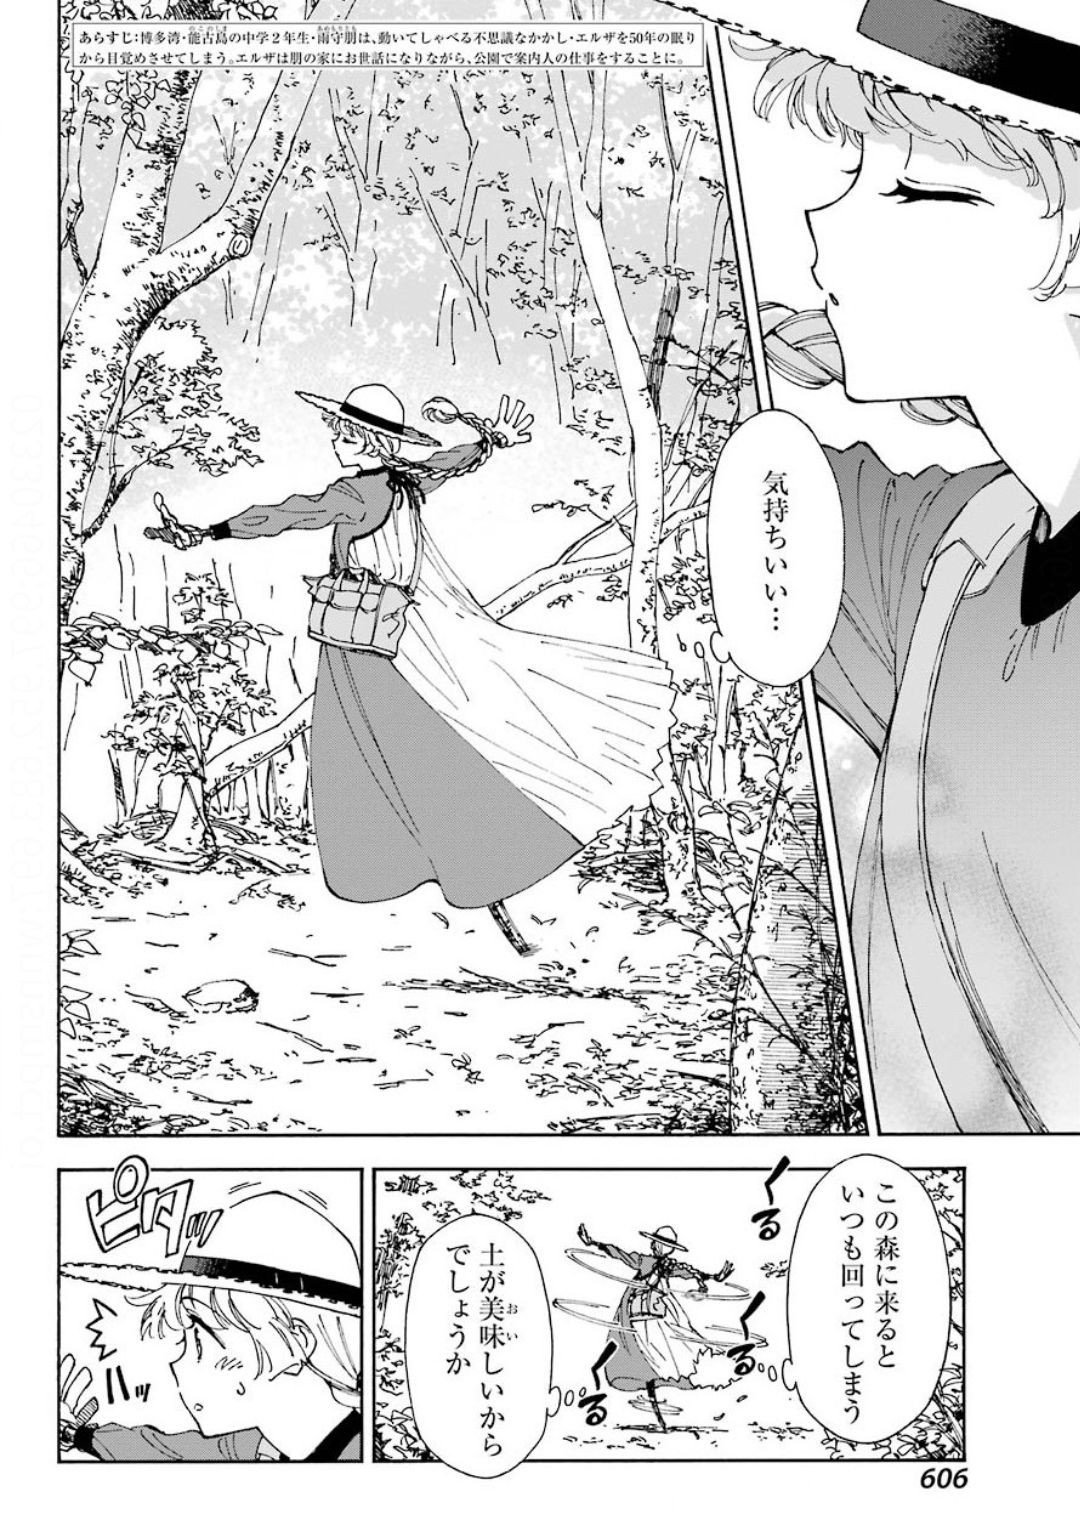 Hotomeku-kakashi - Chapter 06-1 - Page 2